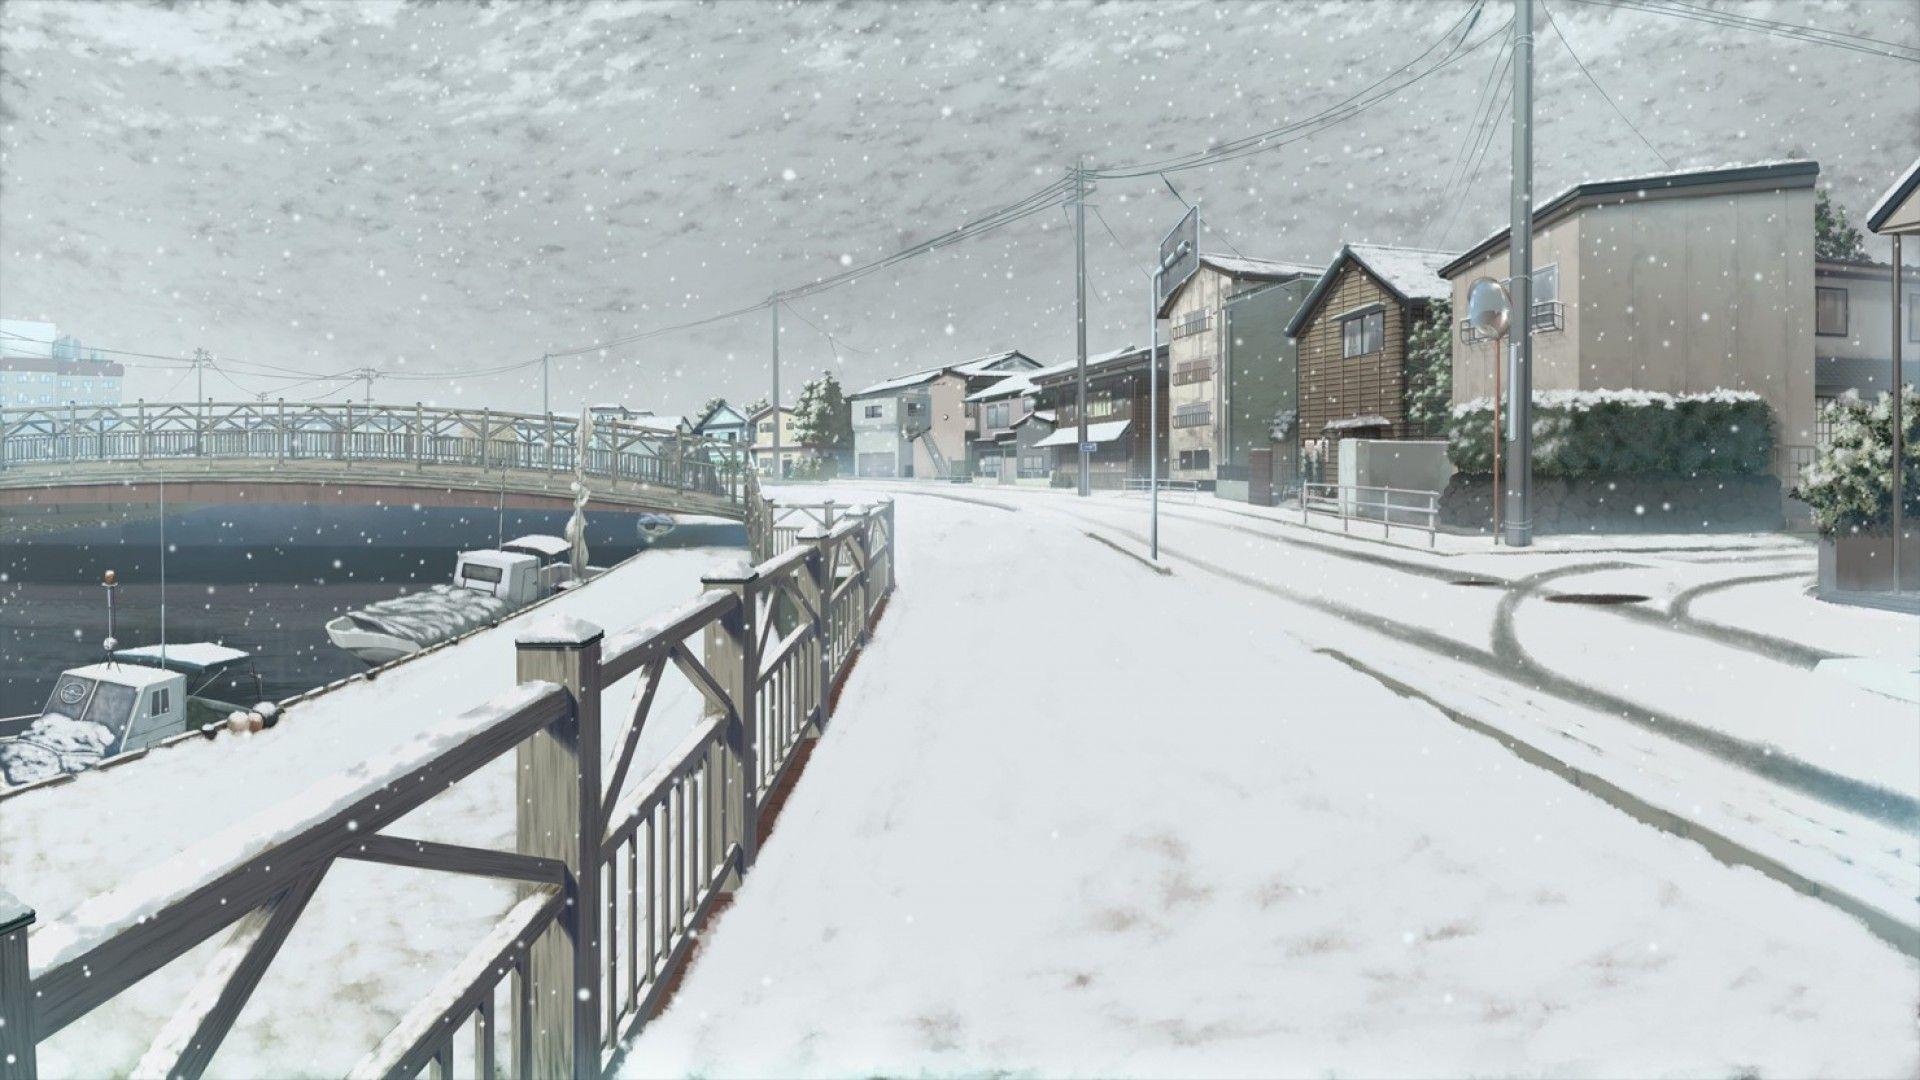 Anime Winter Scenery wallpaper. Winter scenery, Anime